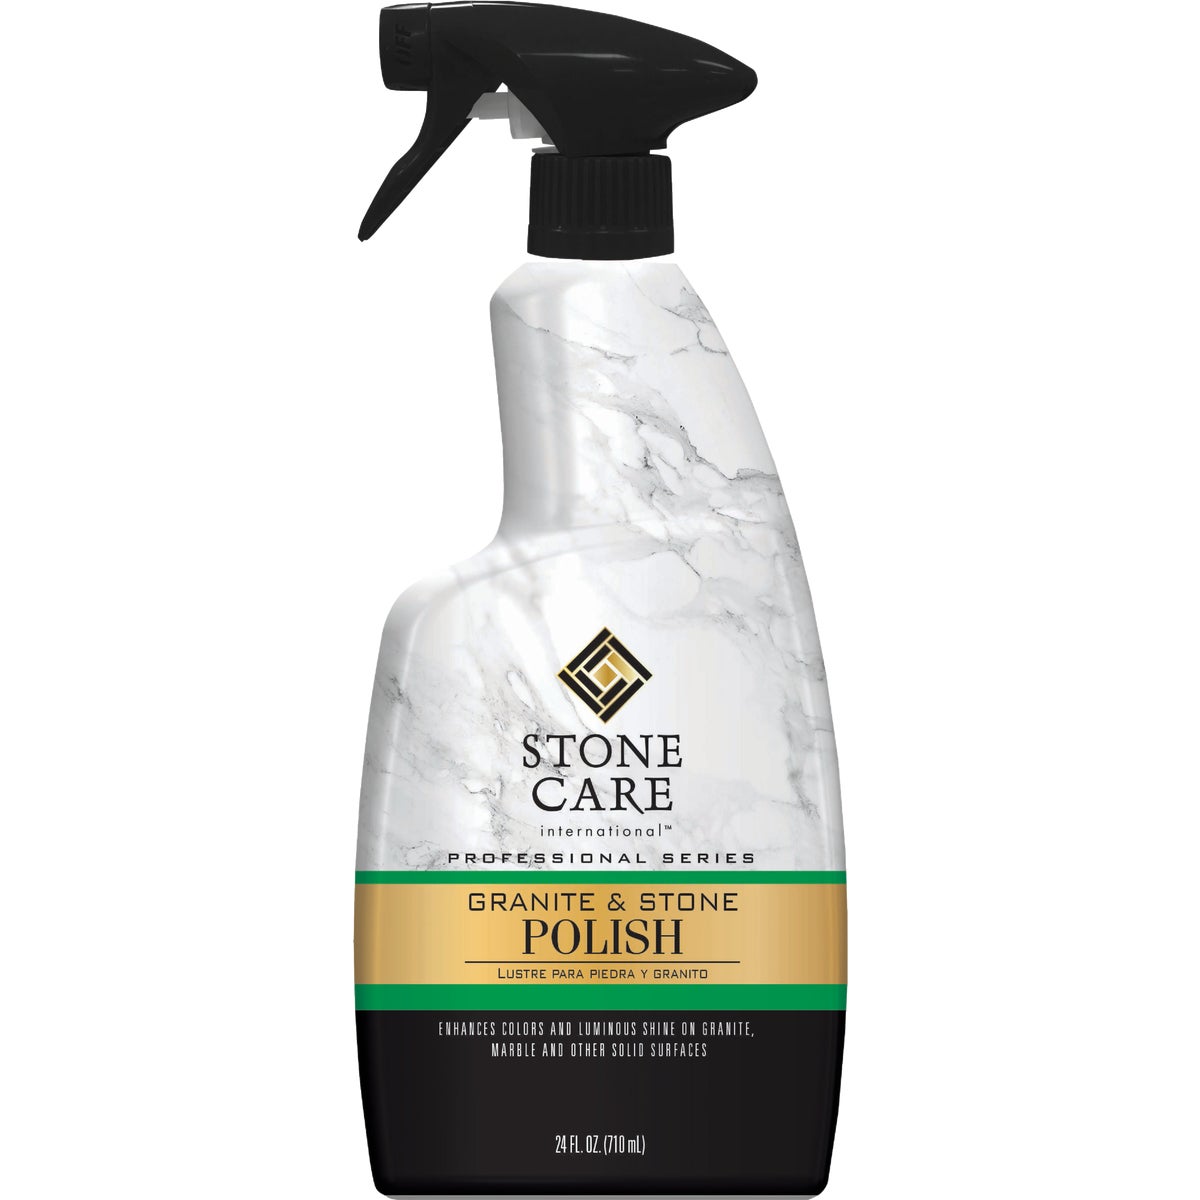 Stone Care International 24 Oz. Granite & Stone Polish